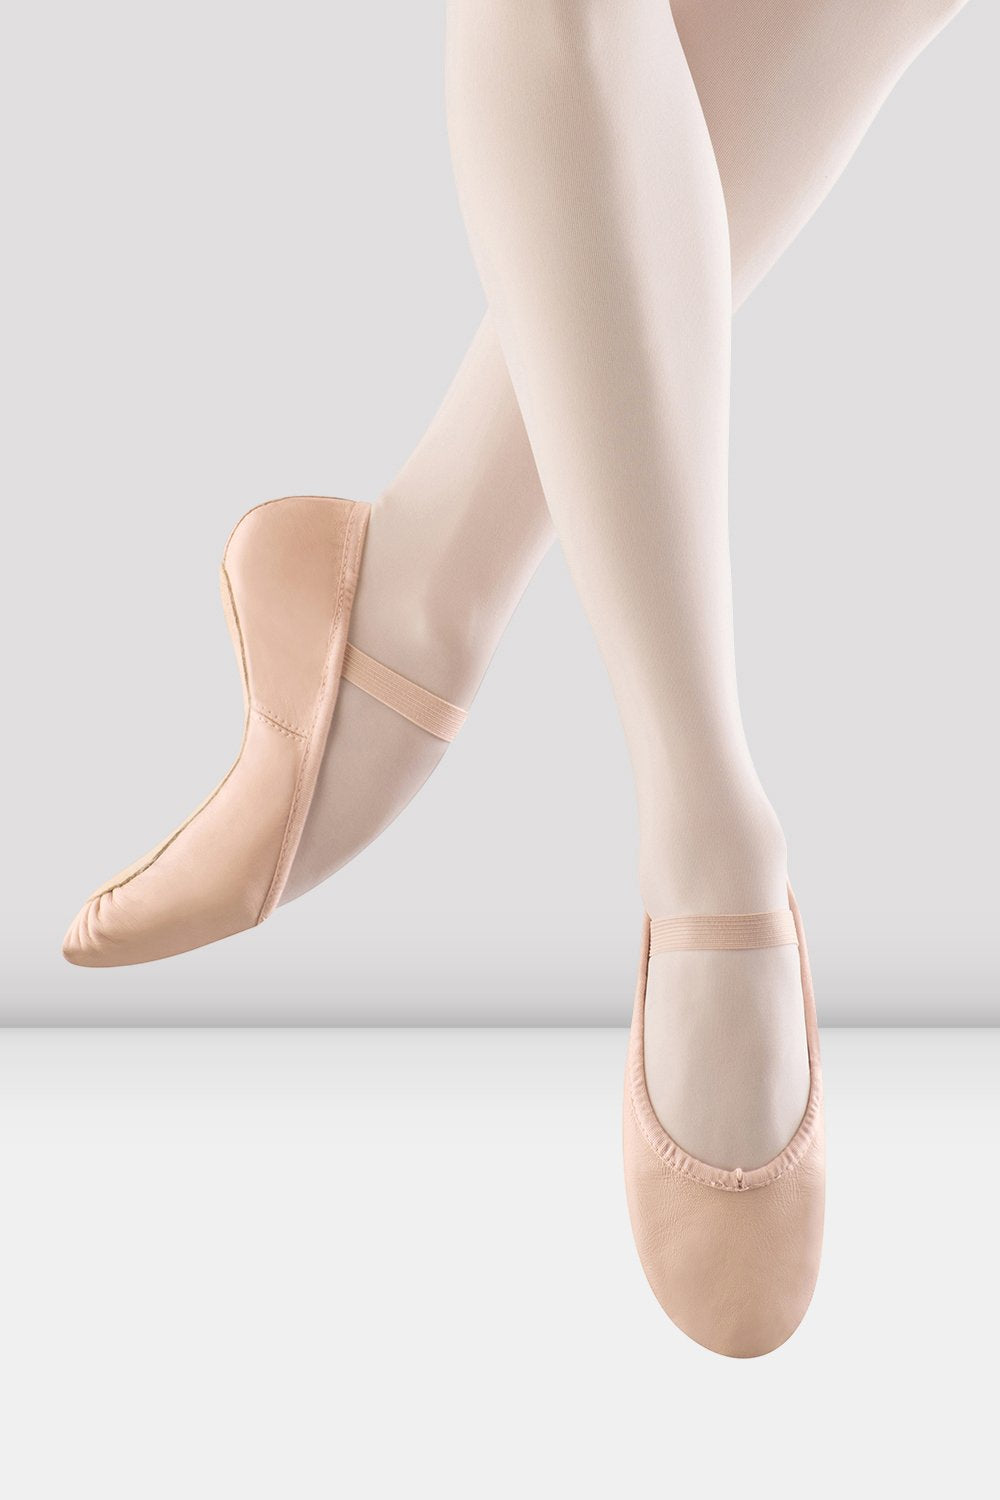 Zapatos bolas de Dansoft, Pink | BLOCH – BLOCH Dance EU